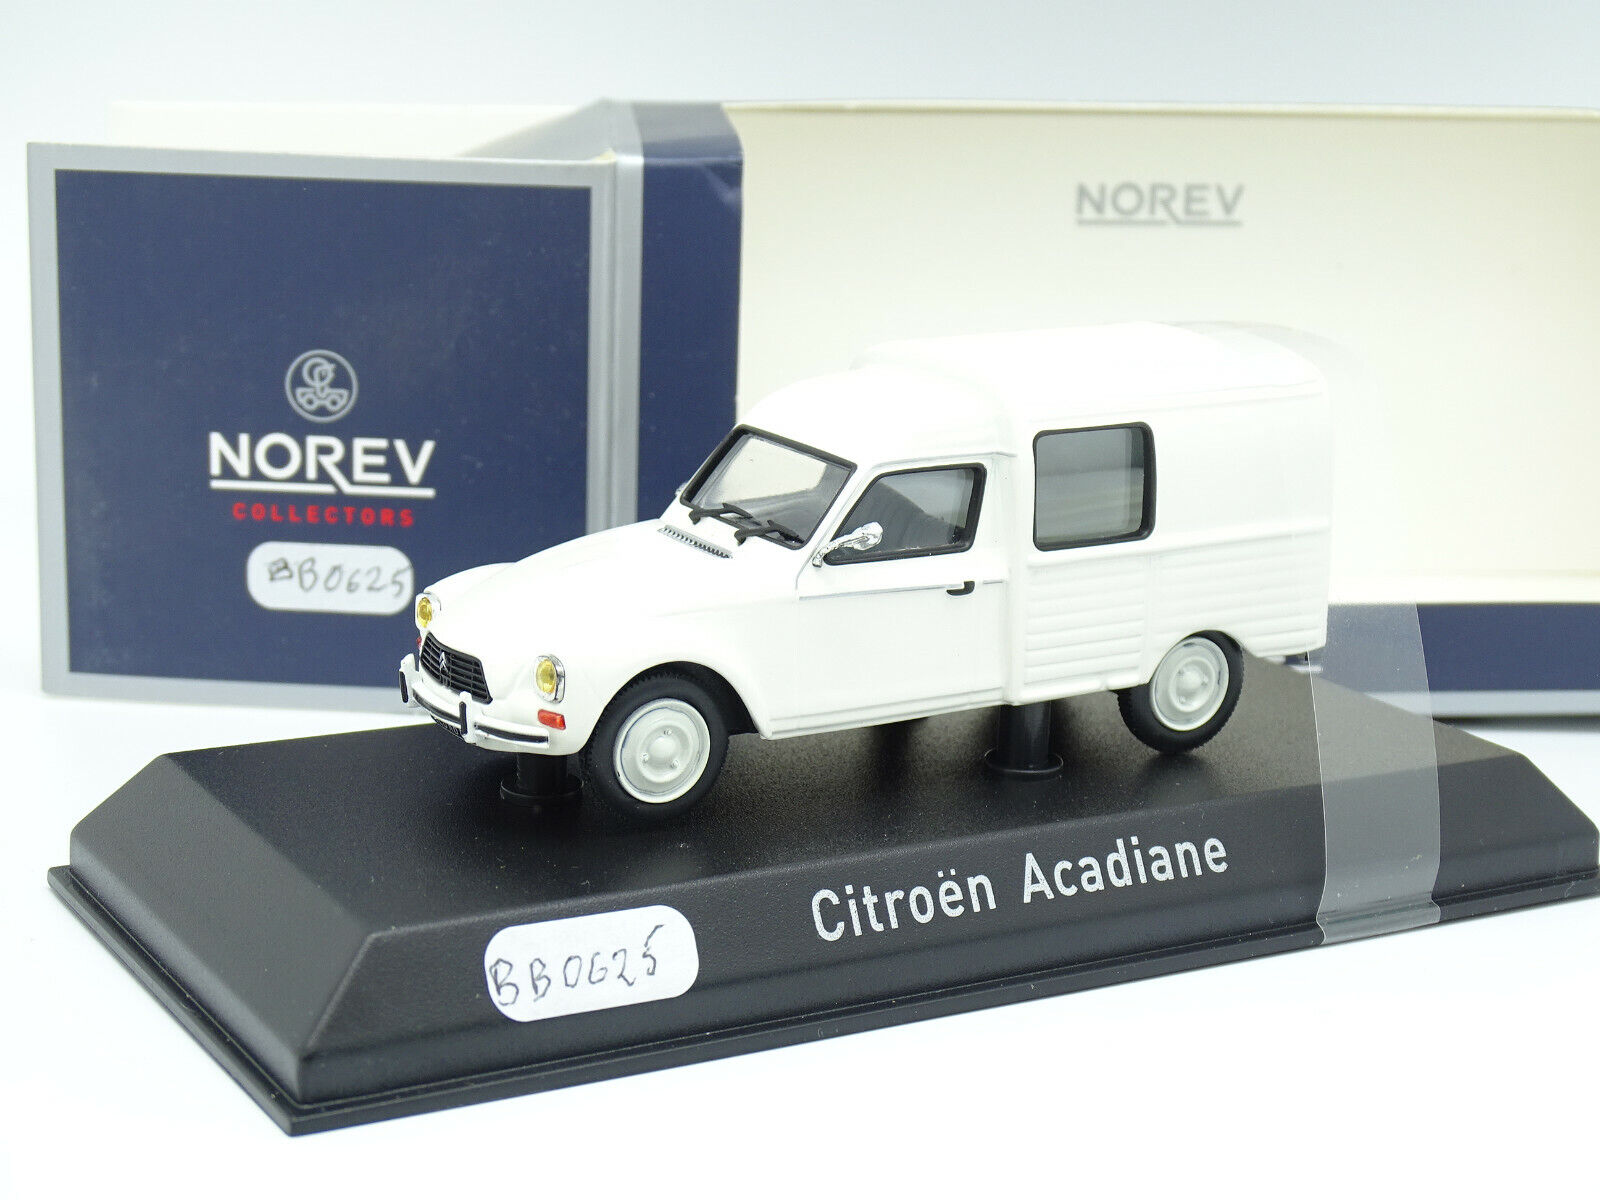 Norev 1 43 - Sales for sale citroen white 1979 Ranking TOP20 acadiane